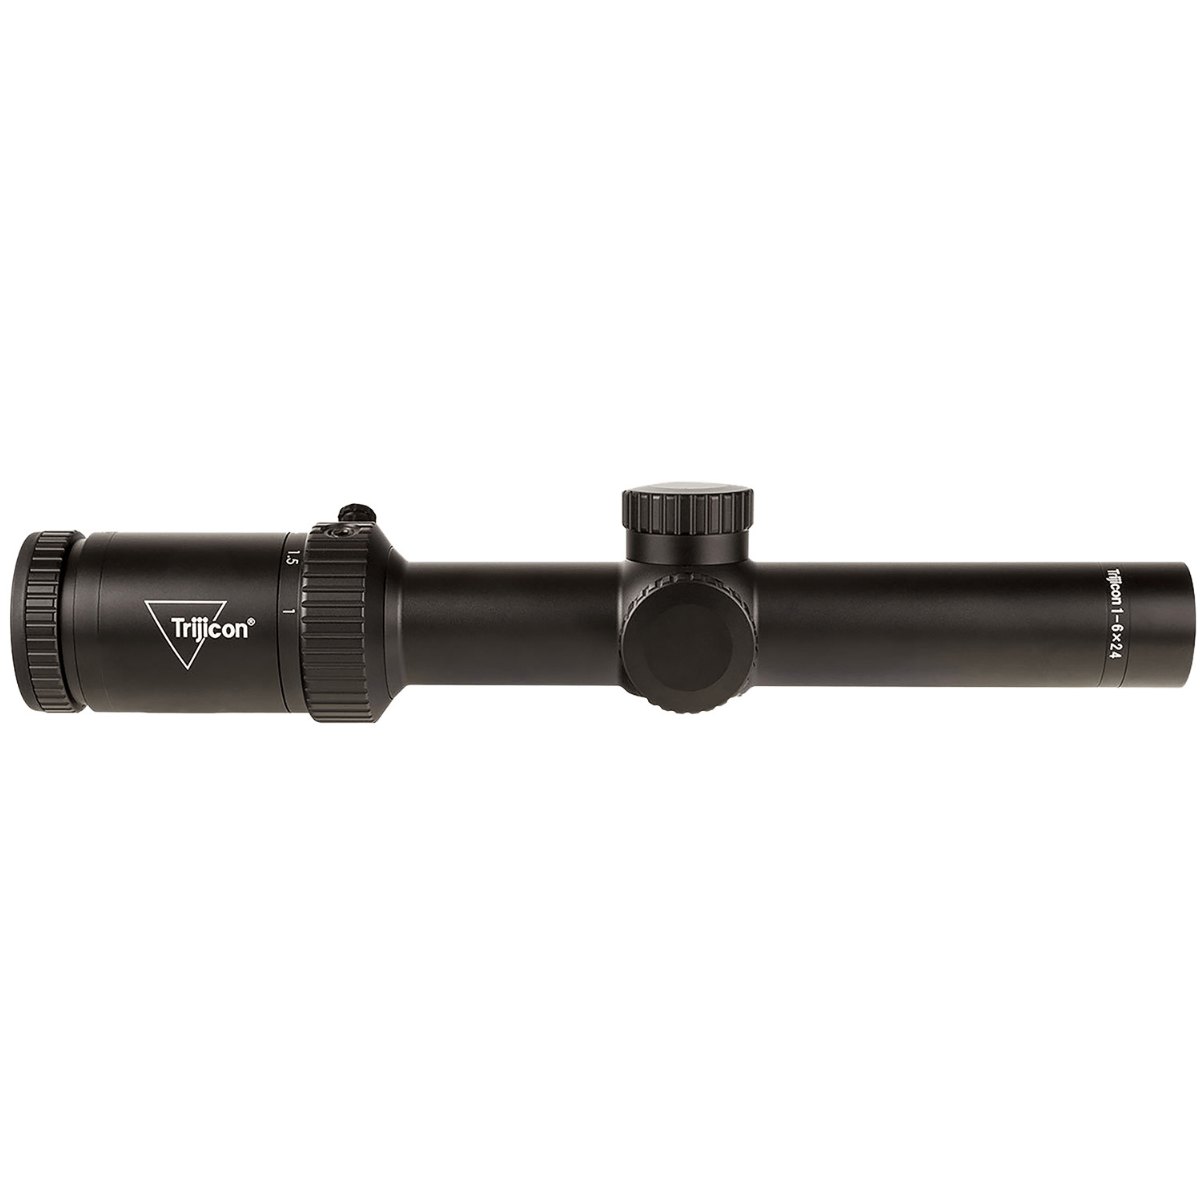 Trijicon Credo HX 1-6x24mm Rifle scope with LED Illuminated Red MOA Segmented Circle Reticle, Left Side View.